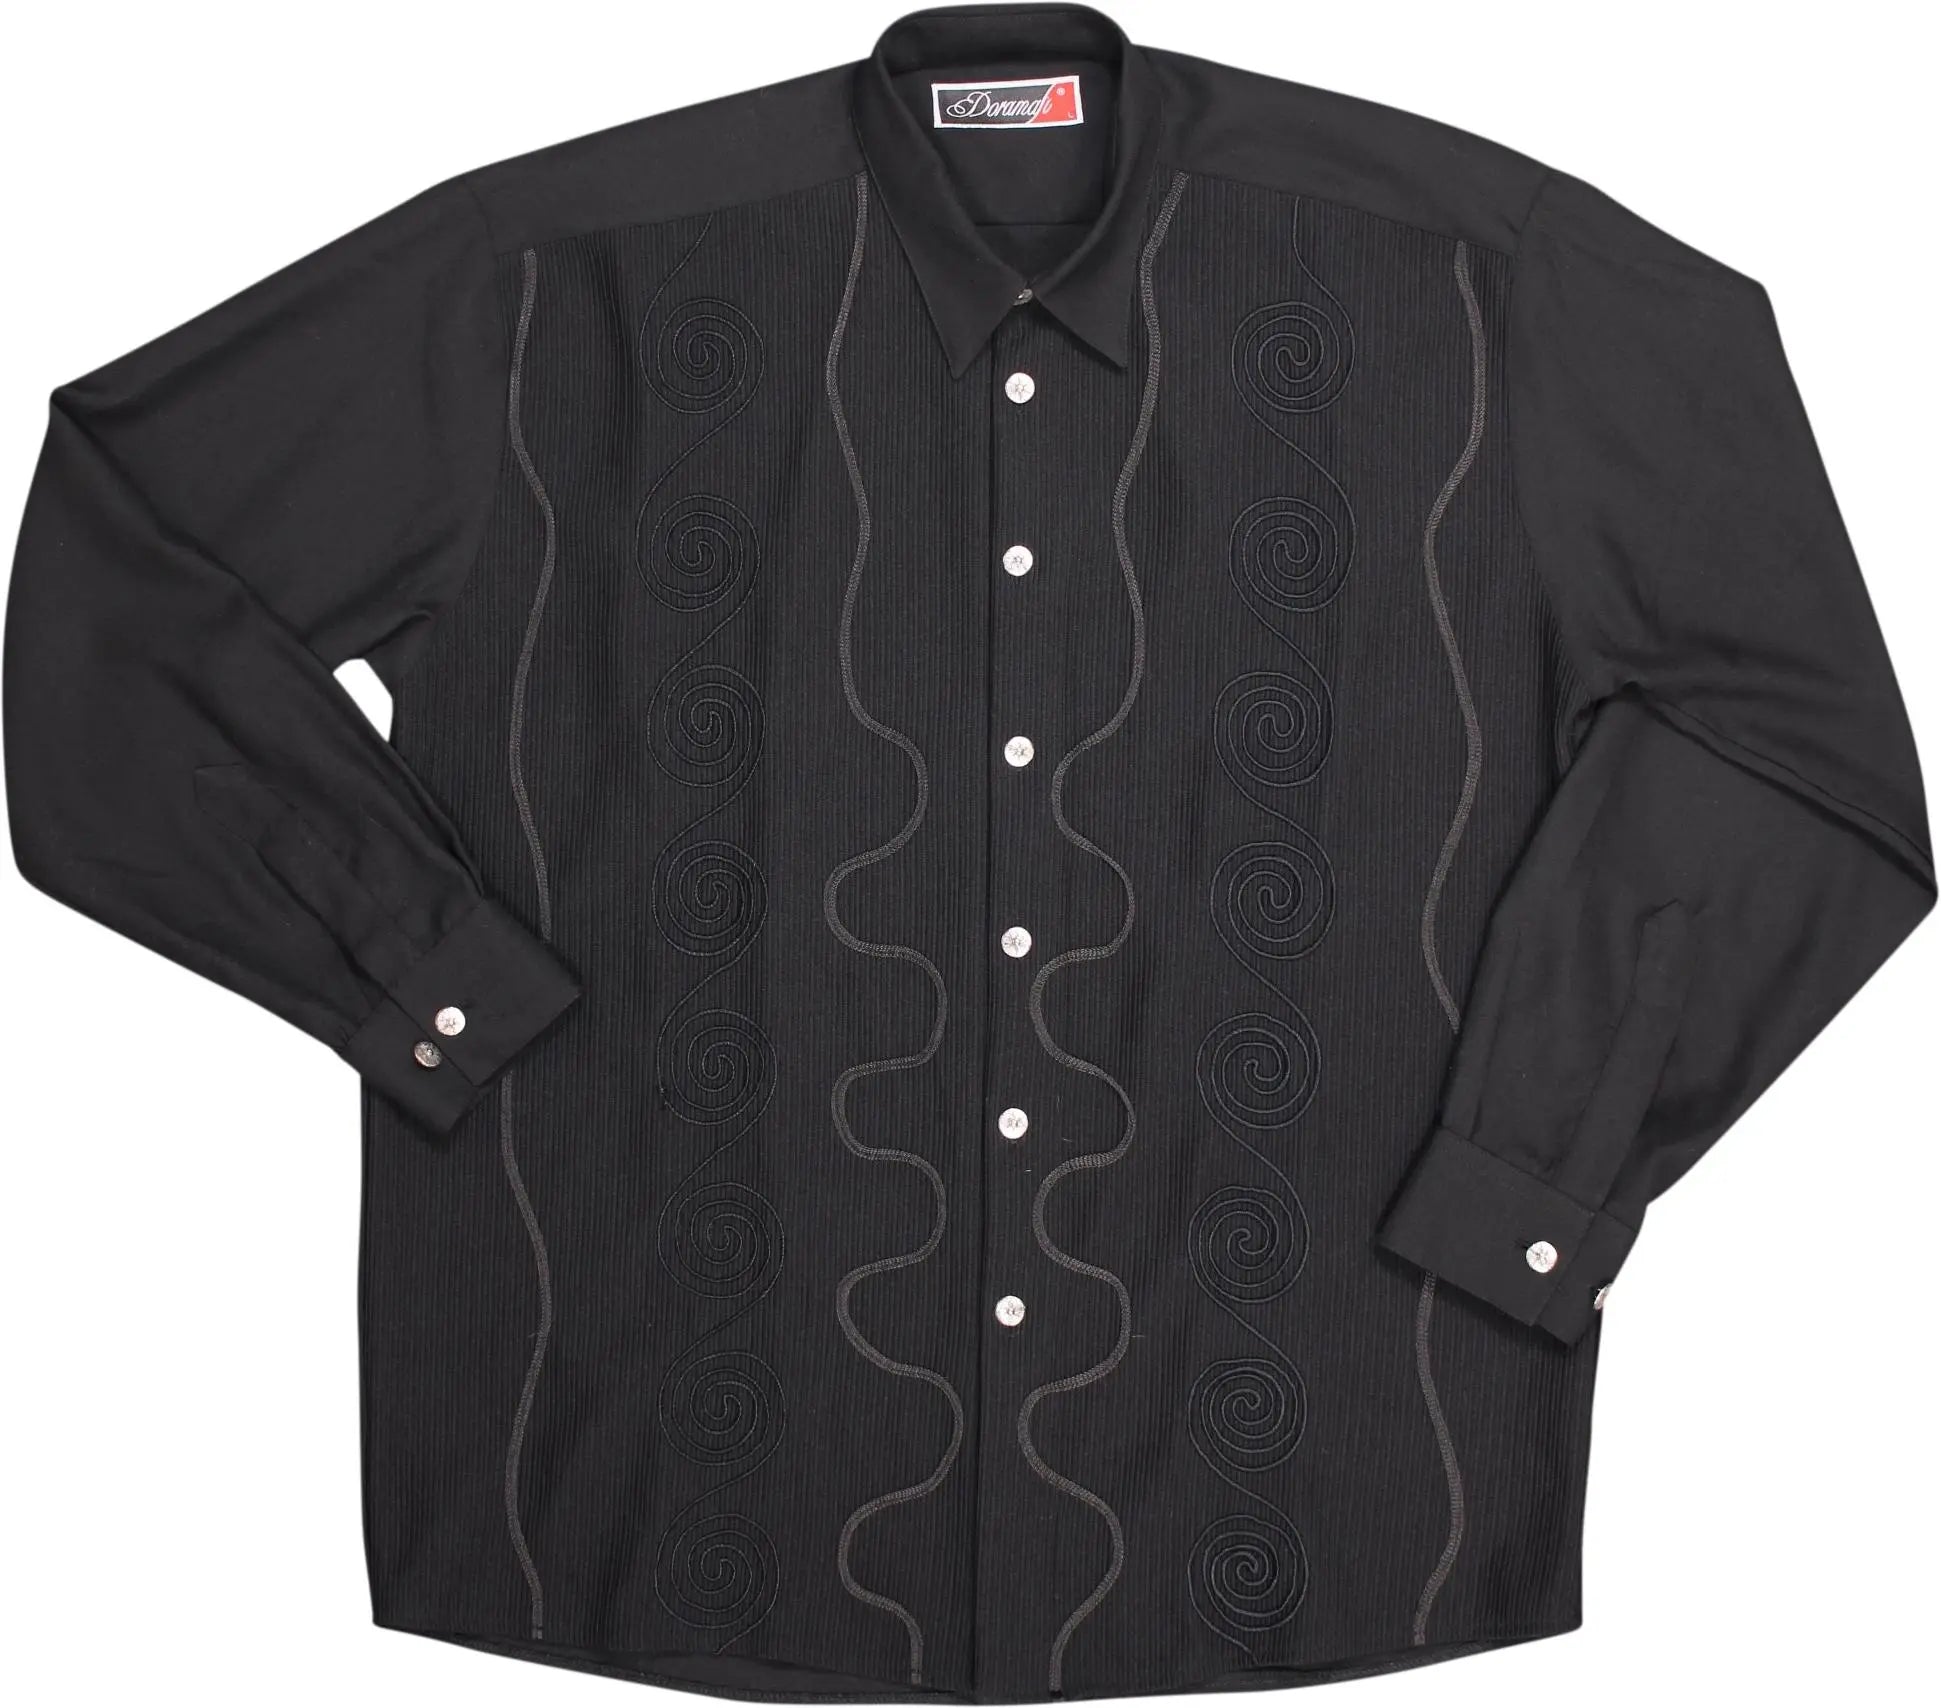 Doramafi - Black Oversized Satin Blouse- ThriftTale.com - Vintage and second handclothing